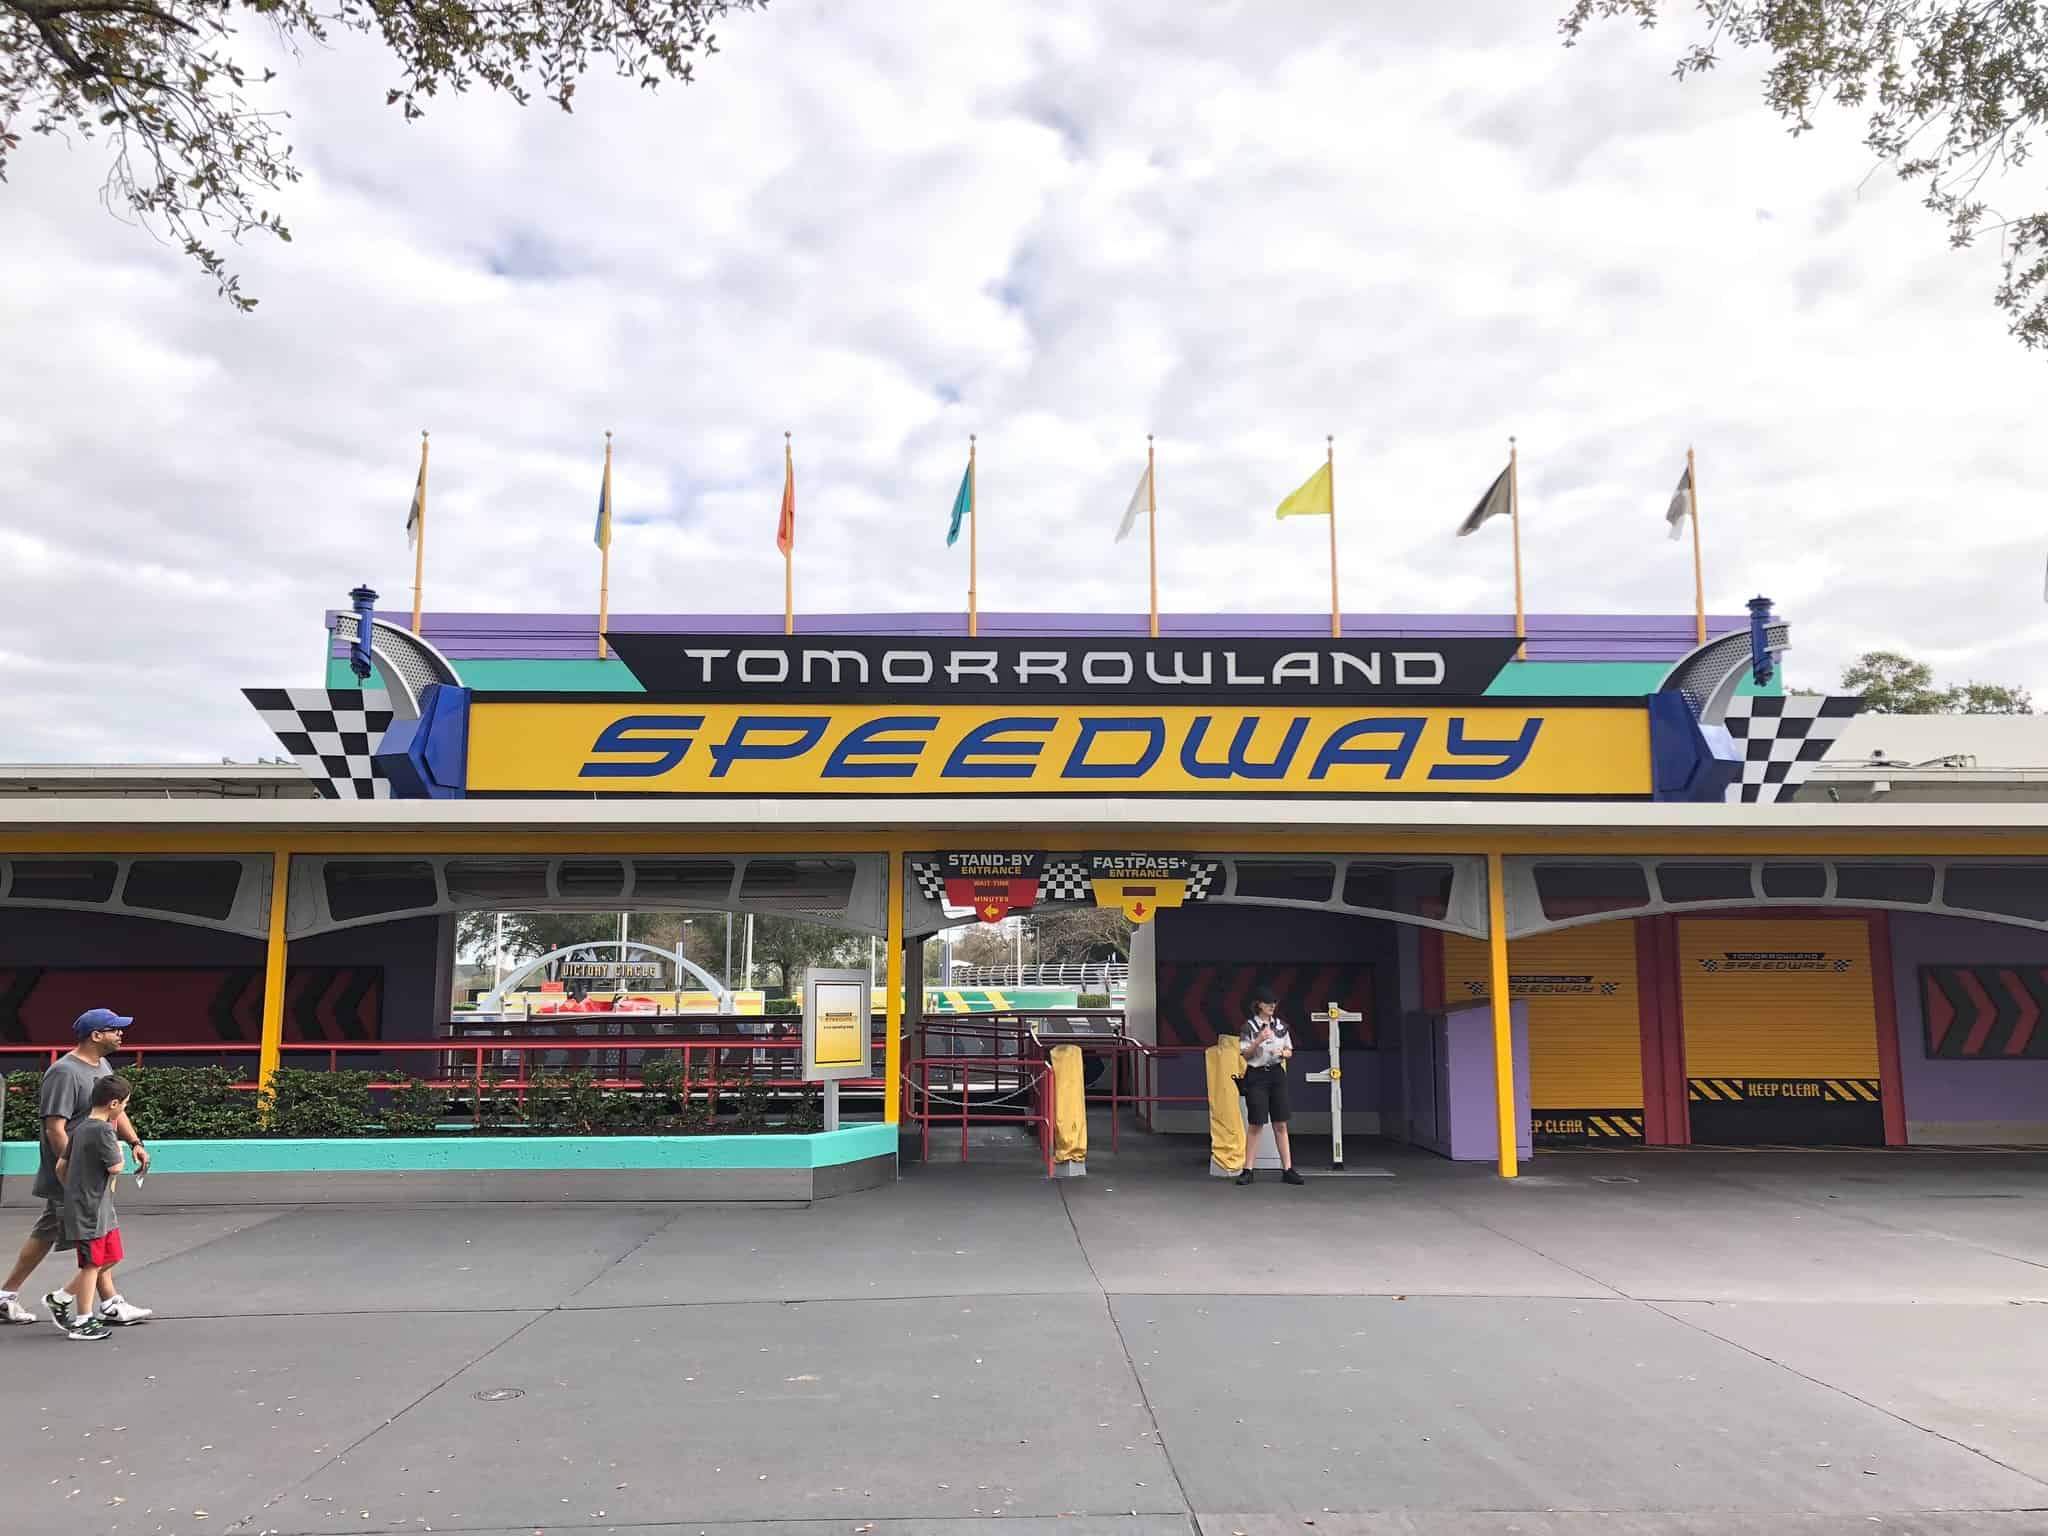 Tomorrowland Speedway - Magic Kingdom Ride